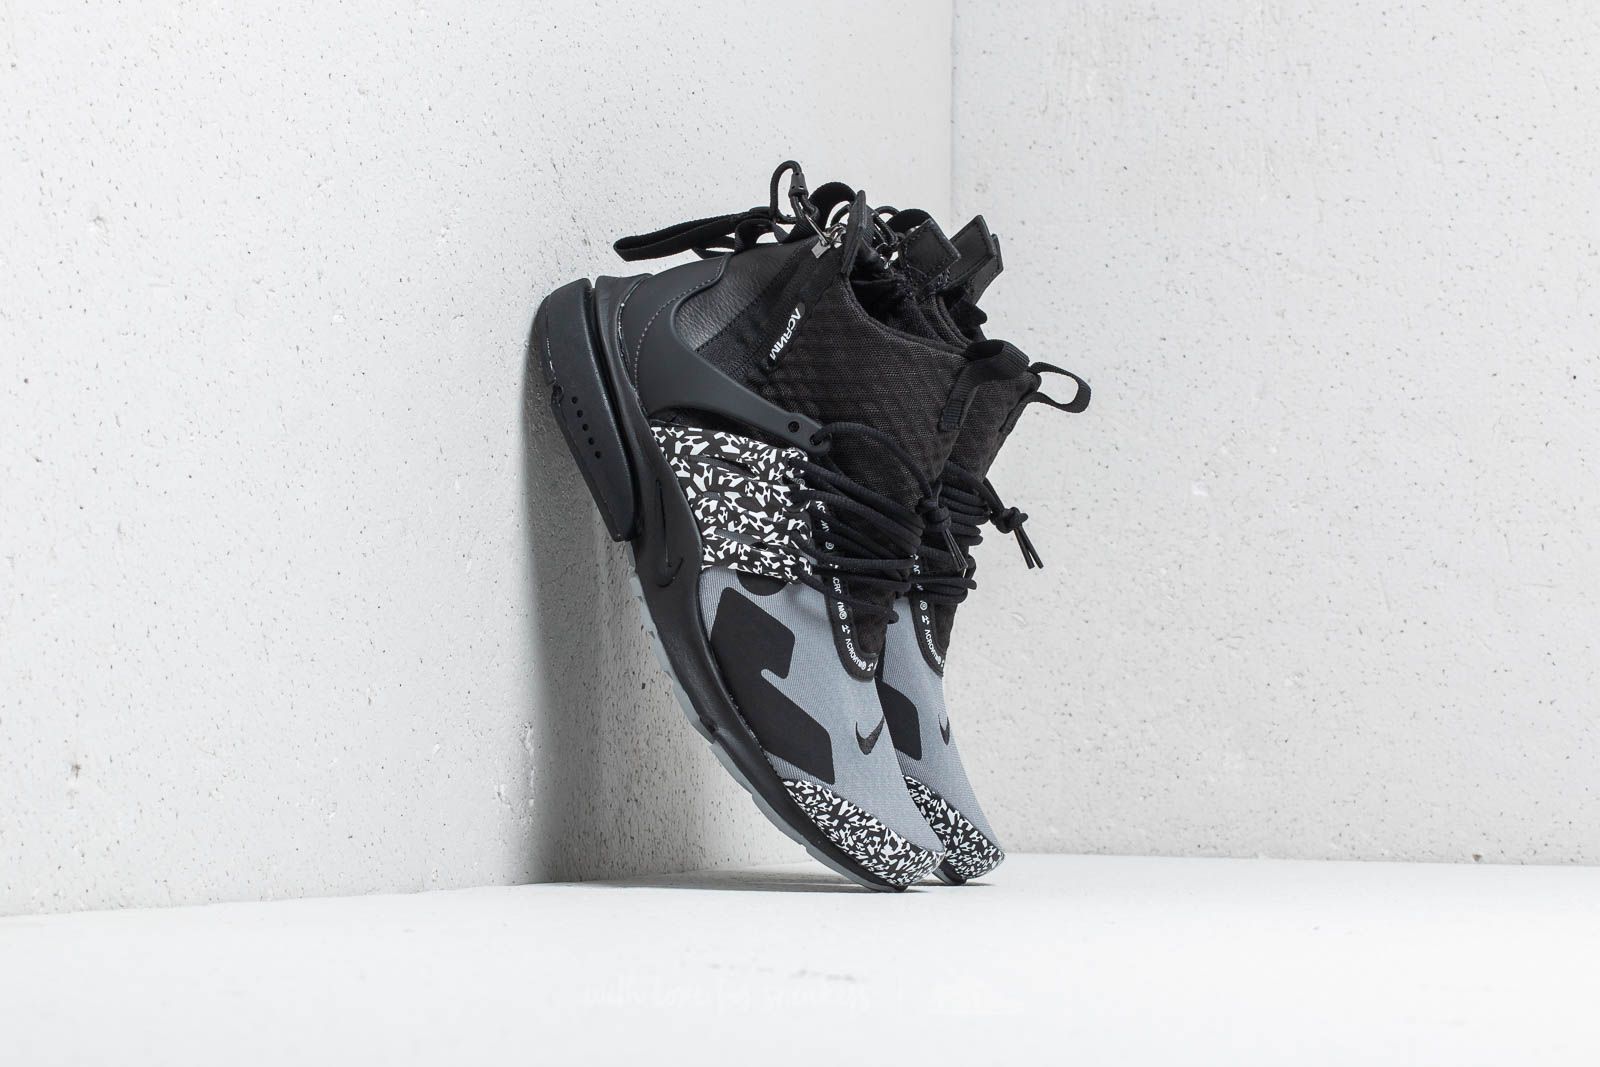 Chaussures et baskets homme Nike x Acronym Air Presto Mid Cool Grey/ Black